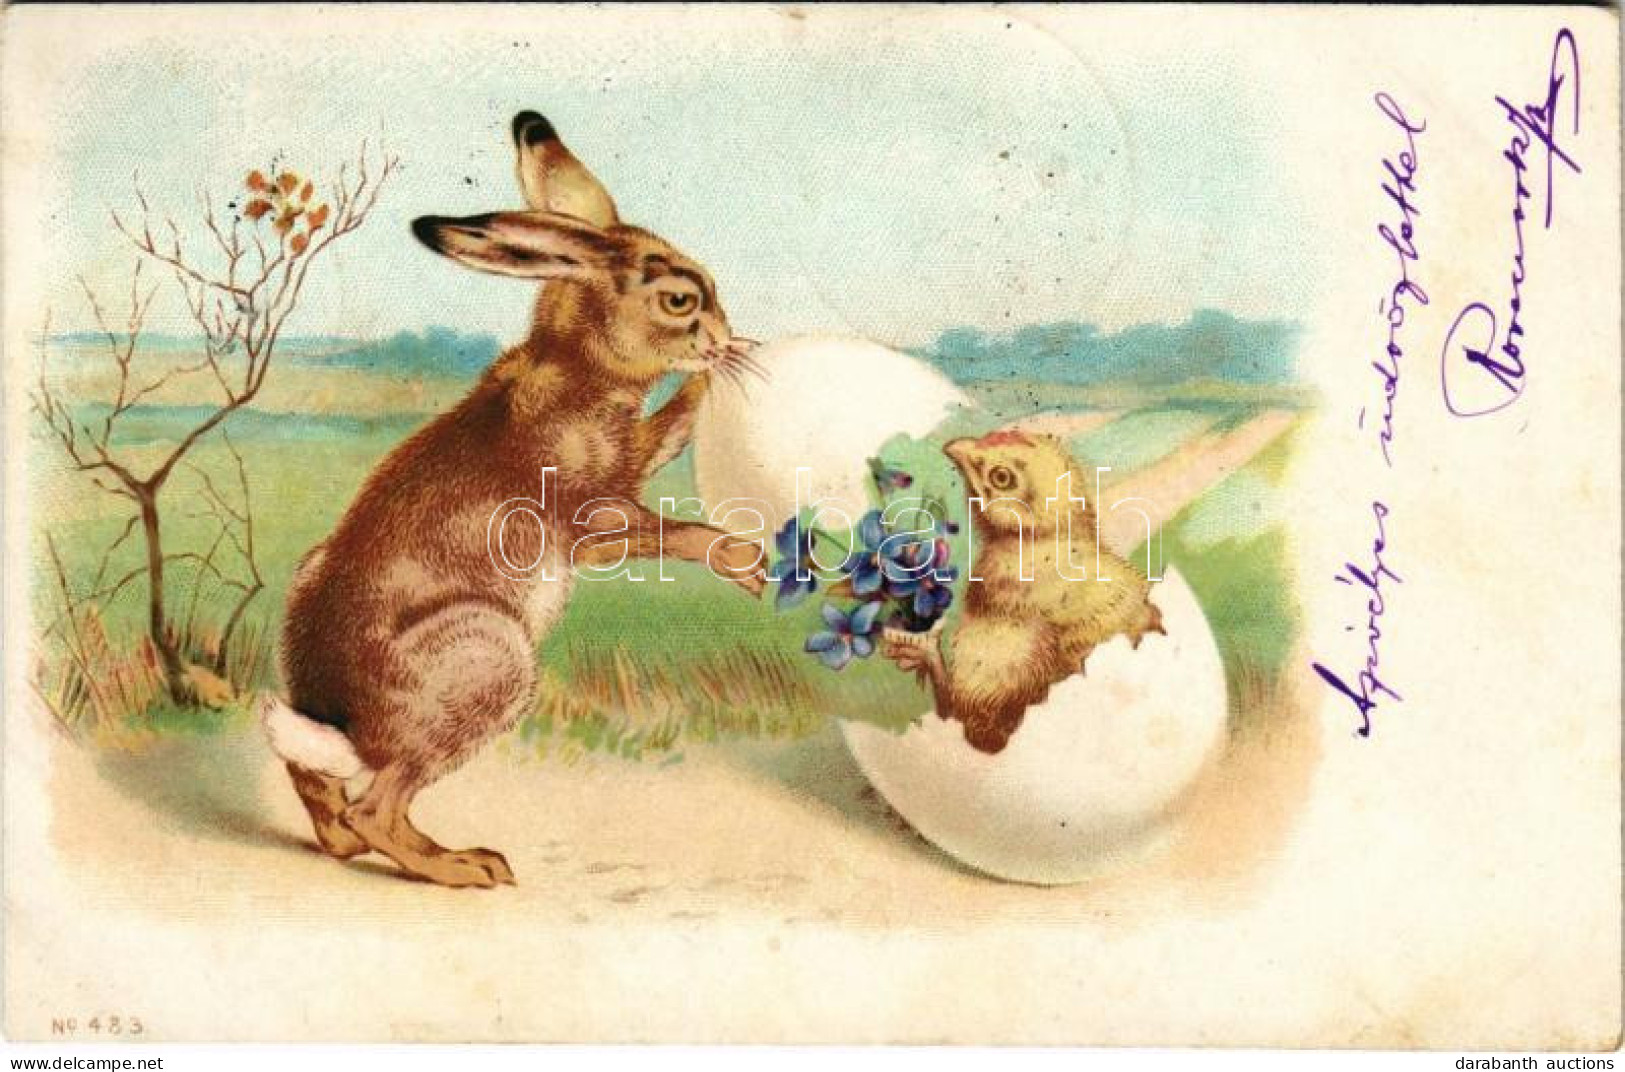 T2/T3 1900 Húsvéti üdvözlet / Easter Greeting Art Postcard With Rabbit And Chicken. Litho (fl) - Non Classés